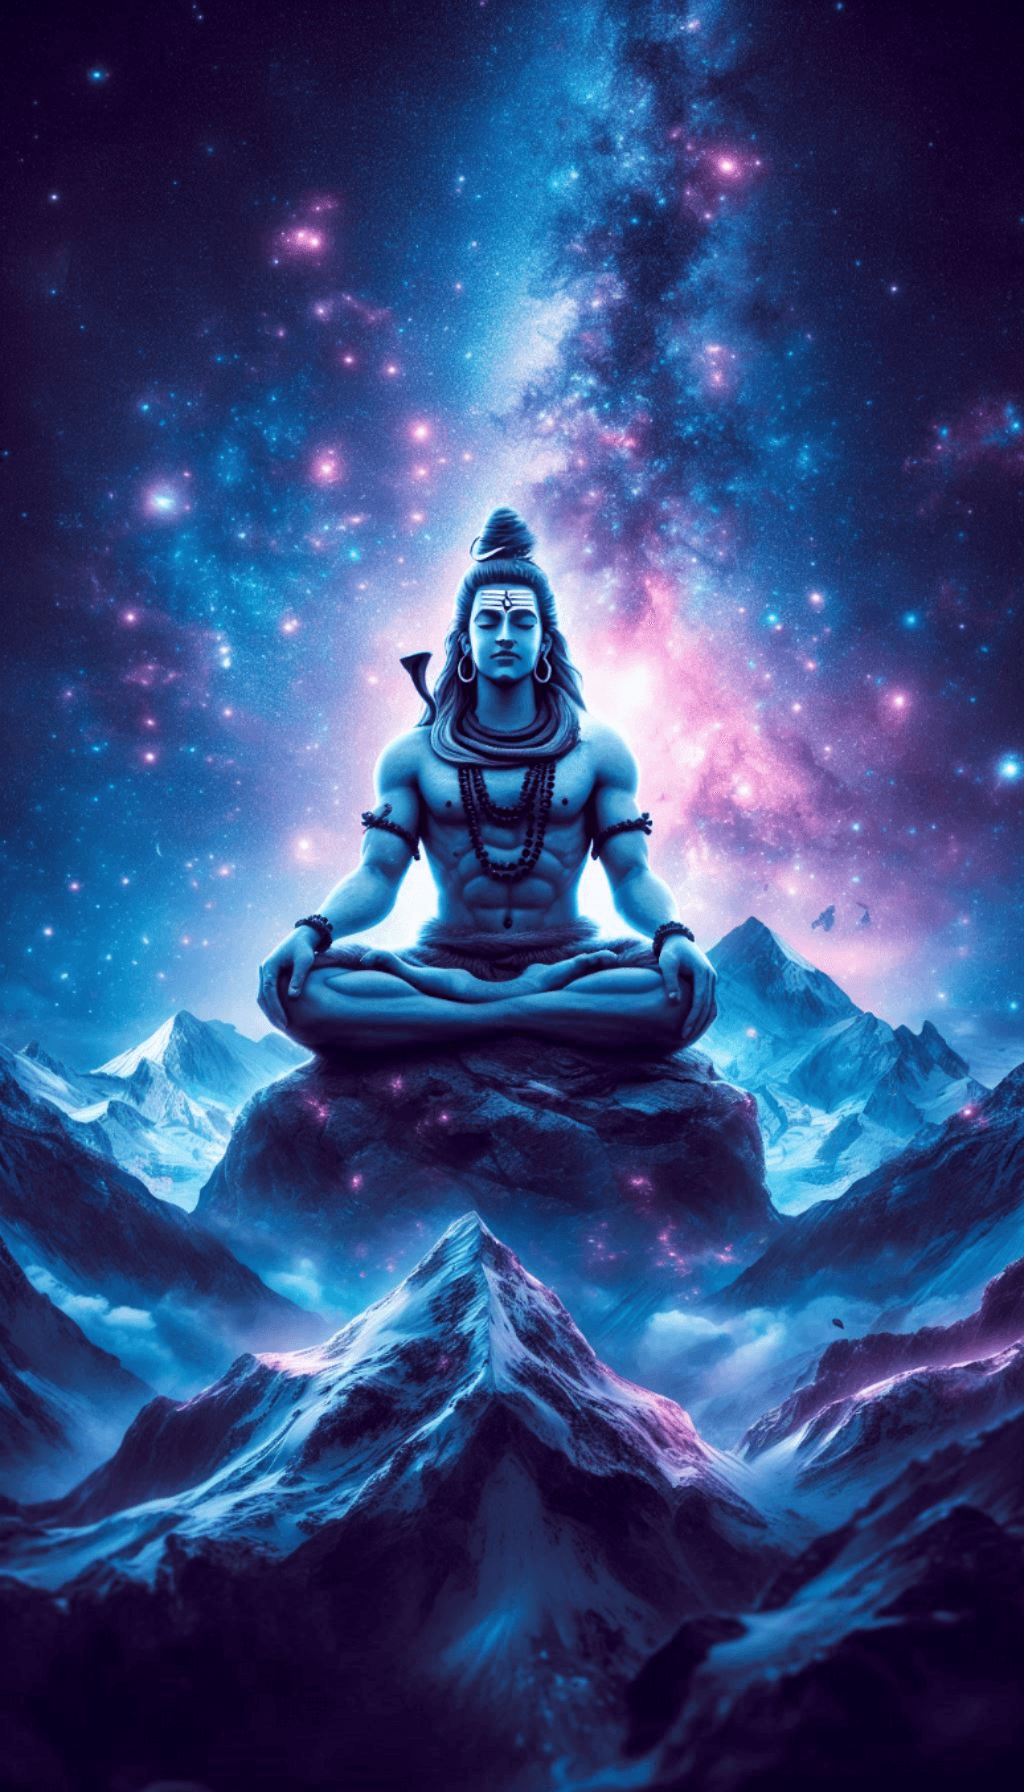 Lord Shiva Meditating in Himalaya with Night Sky Stars in Background